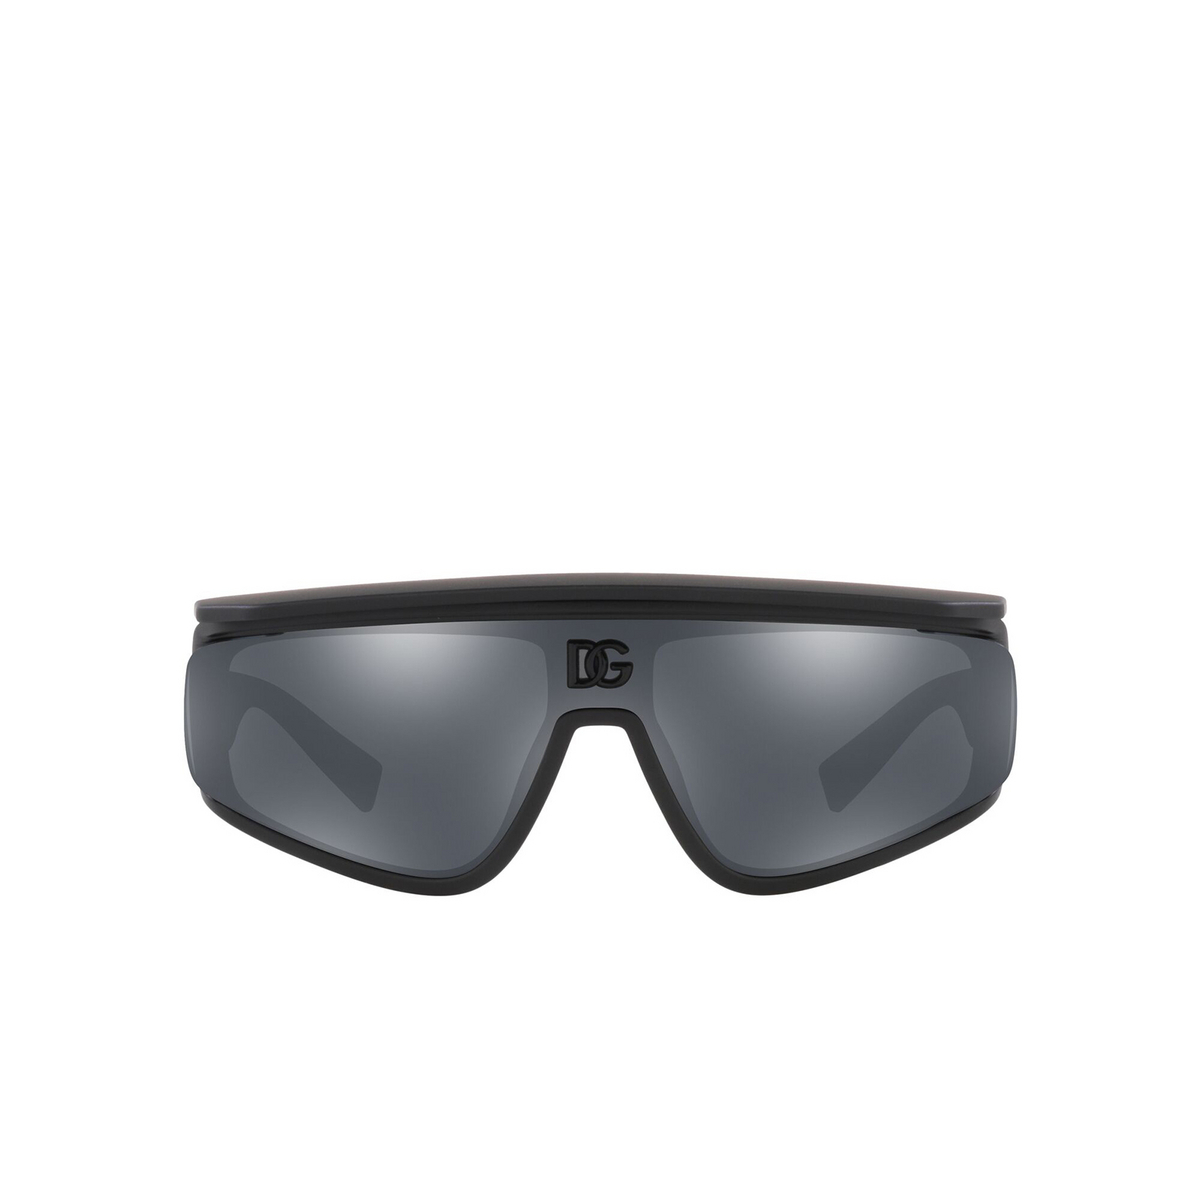 Dolce & Gabbana DG6177 Sunglasses 25256G Matte Black - front view